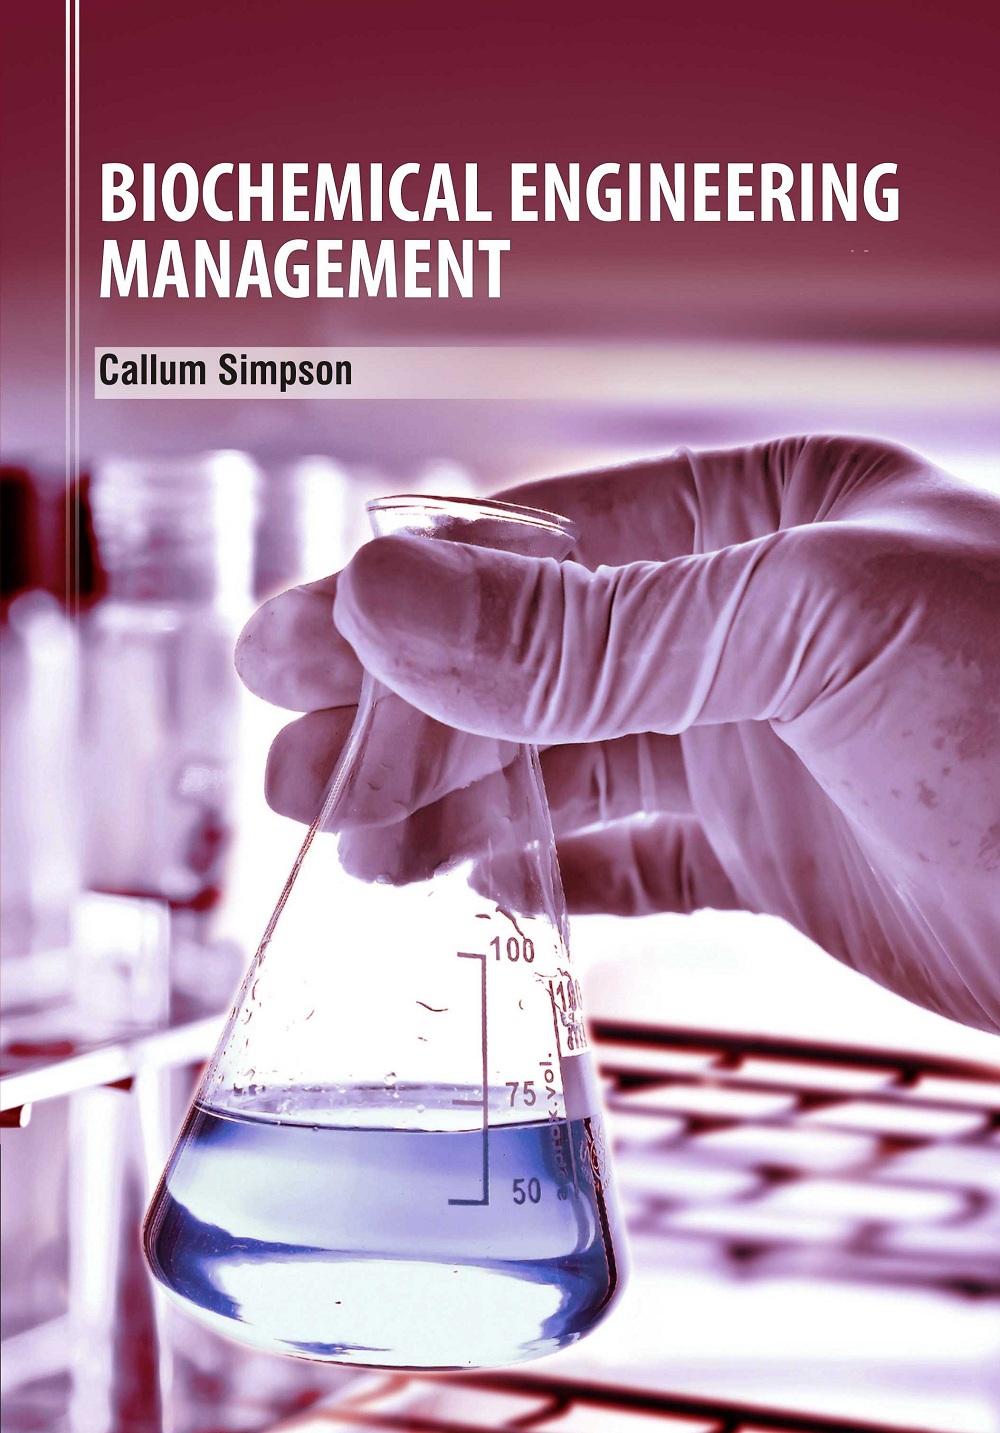 catalog/books/Biochemical Engineering Management.jpg